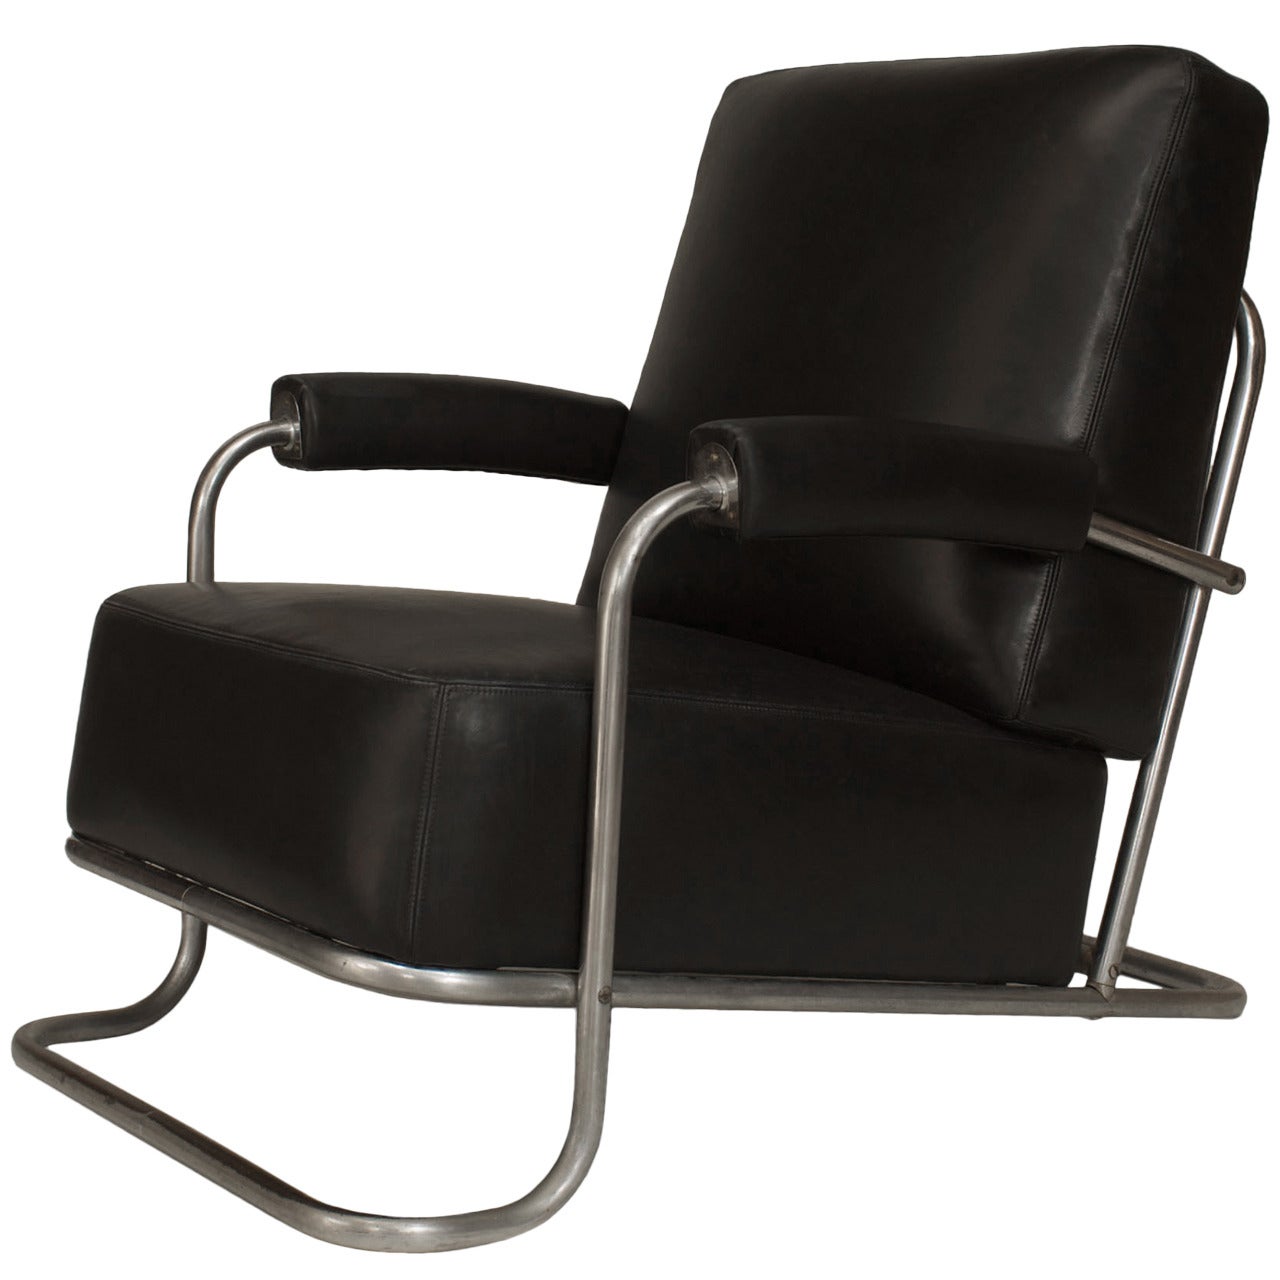 R.C. Coquery French Art Deco Tubular Chrome Arm Chair For Sale